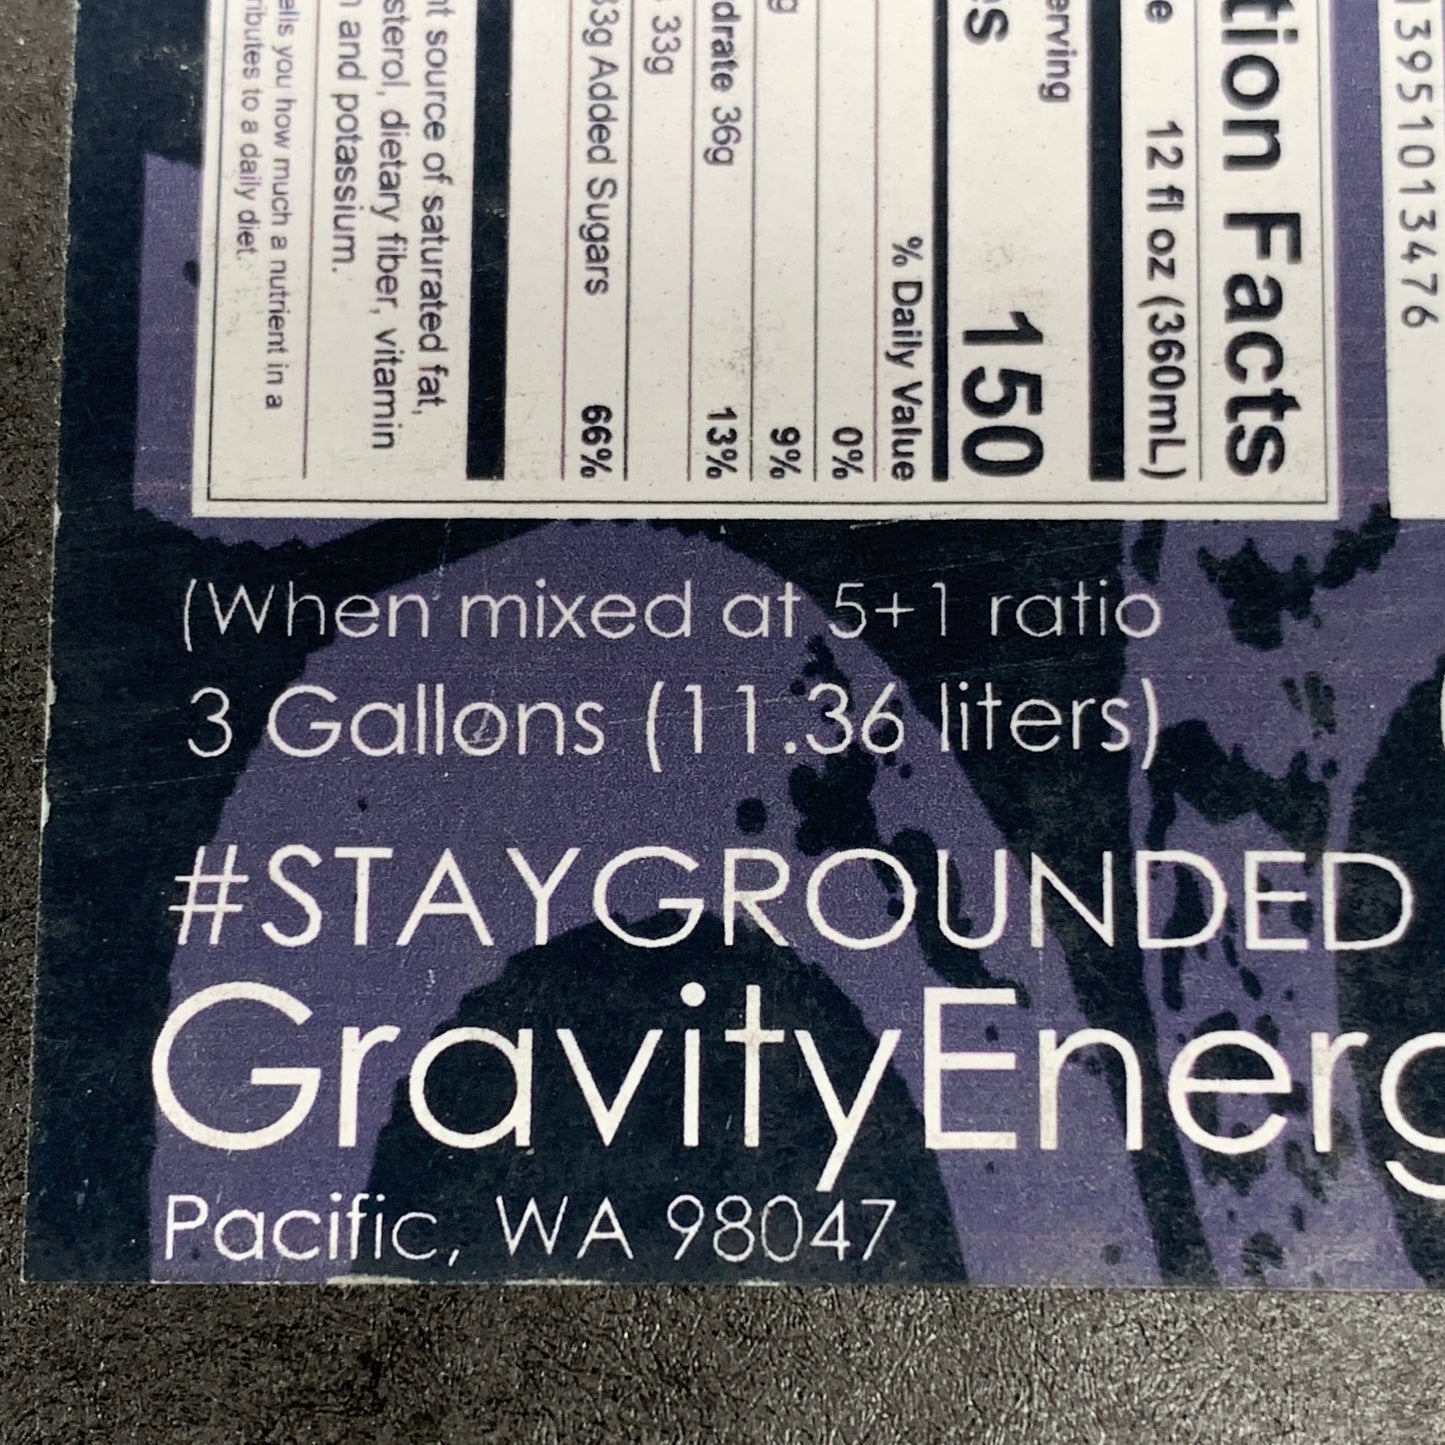 GRAVITY ENERGY Gravity Energy Beyond Original Limited Edition 5+1 Ratio 3 Gallons